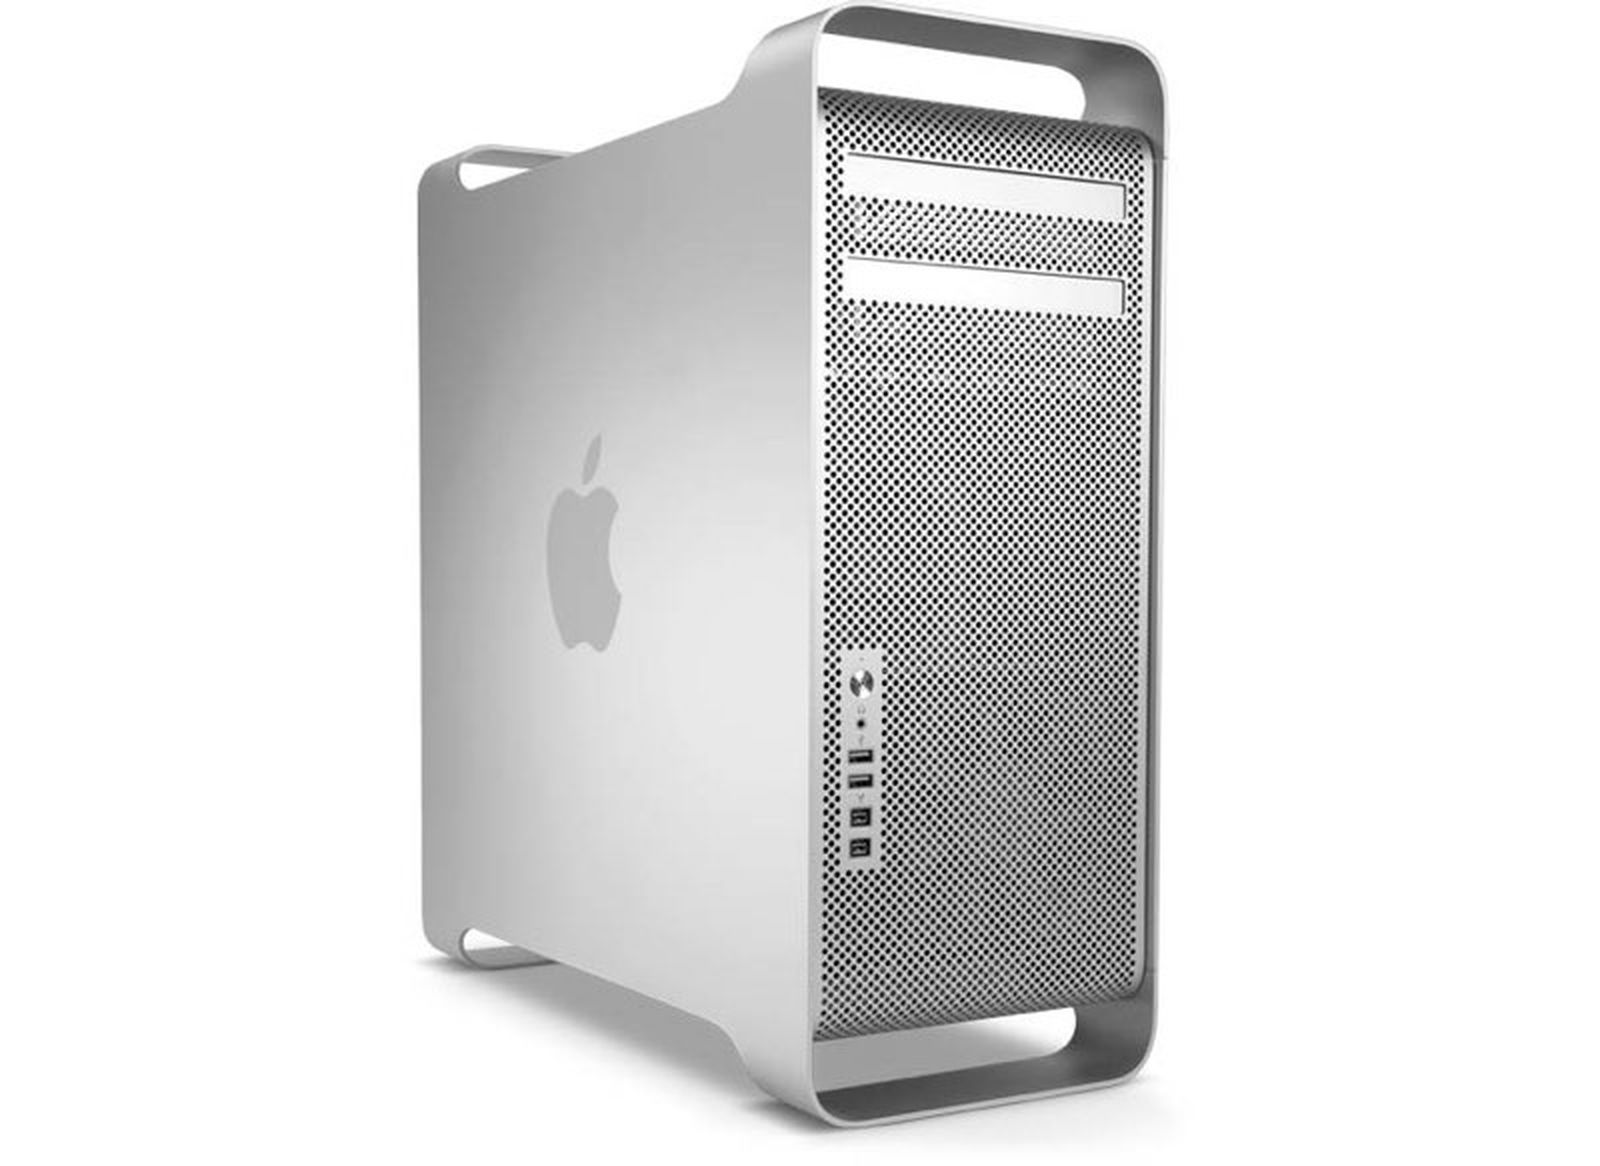 2012 mac desktop computer